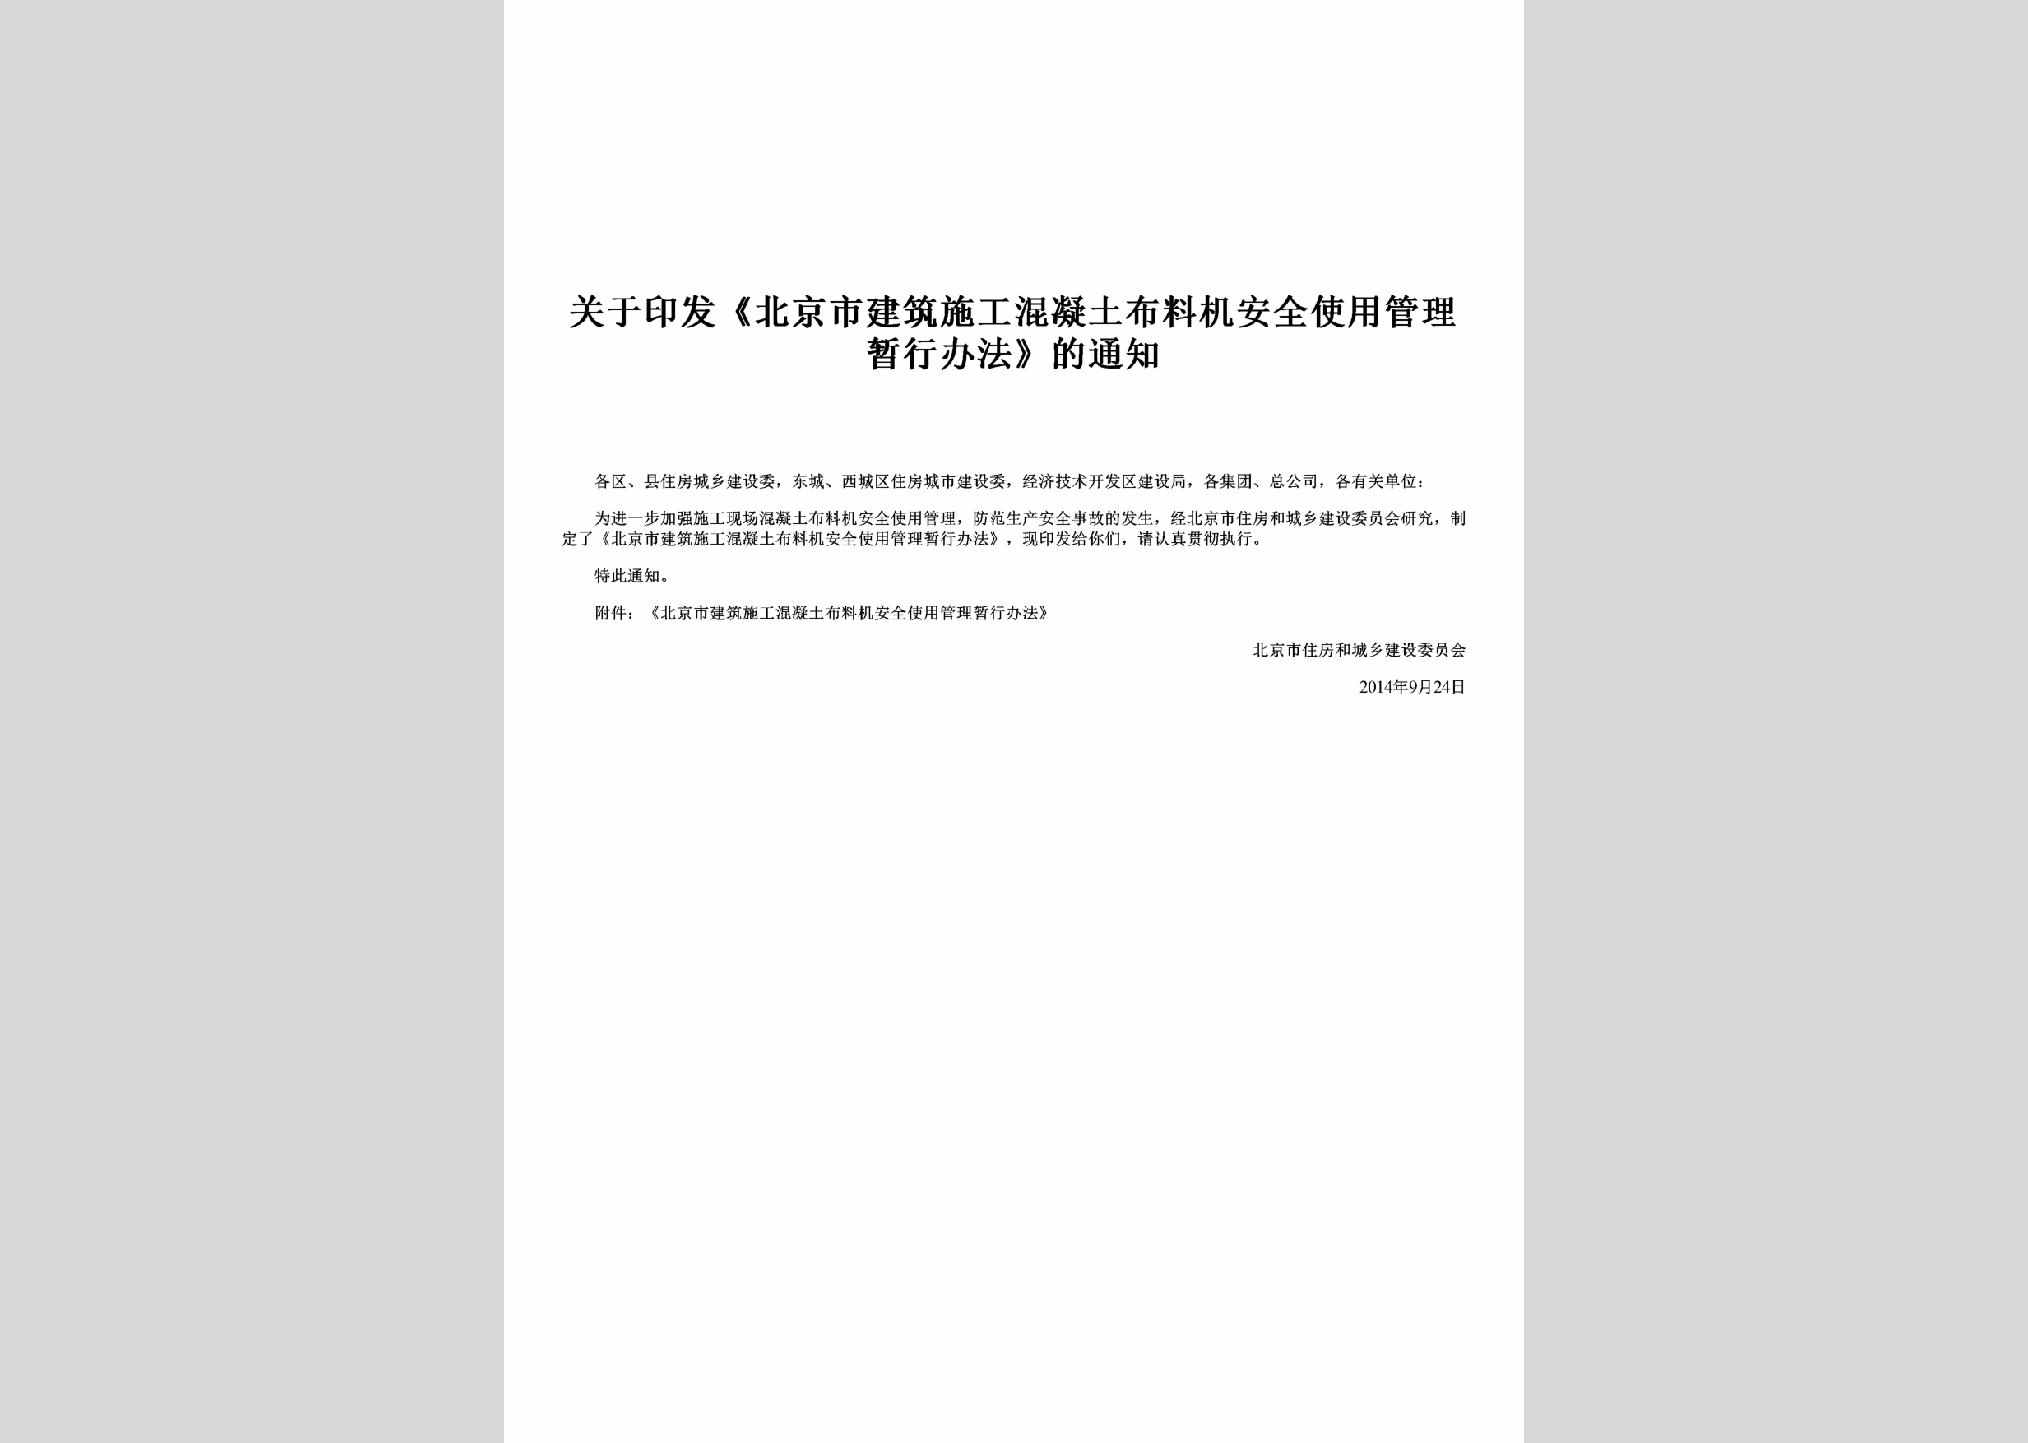 BJ-JZSGGLBF-2014：关于印发《北京市建筑施工混凝土布料机安全使用管理暂行办法》的通知